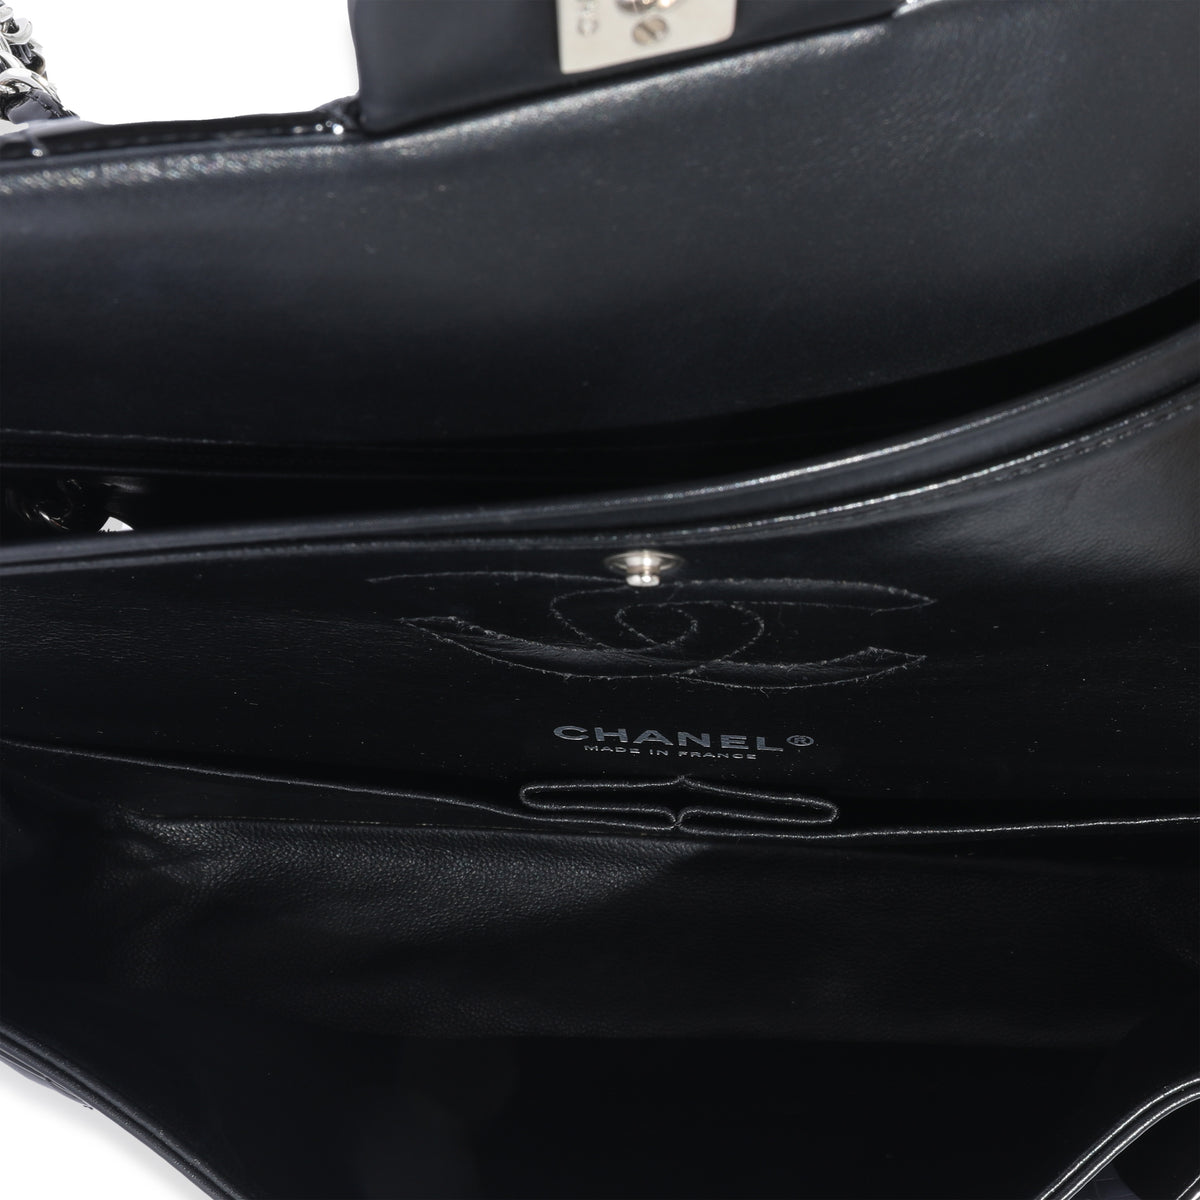 Chanel Black Patent Medium Classic Flap Bag